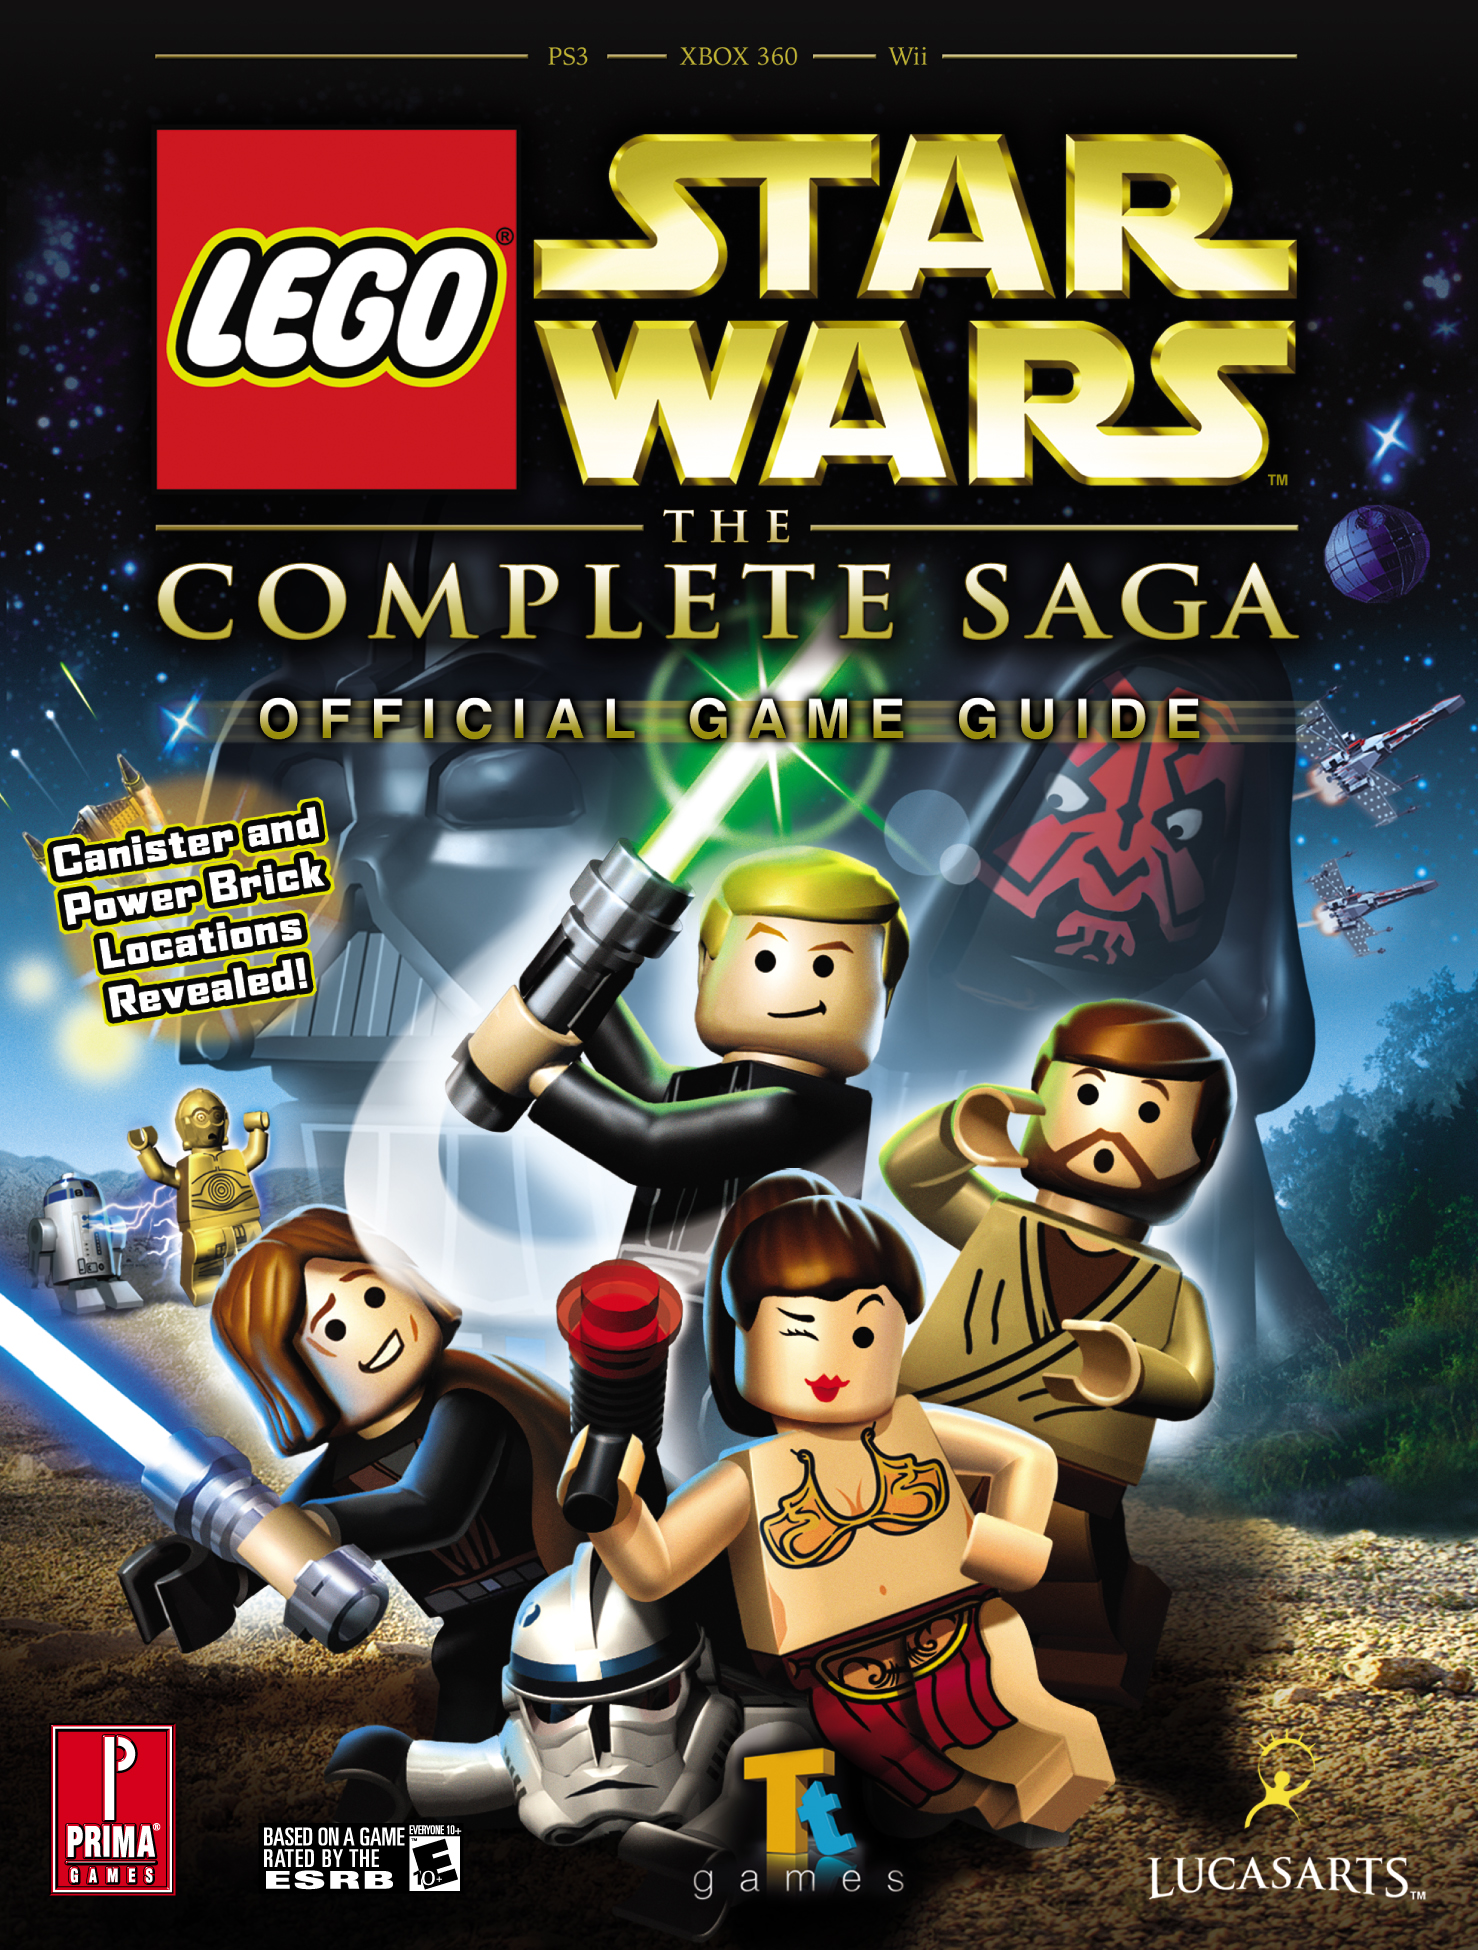 LEGO Star Wars: The Complete Saga #22